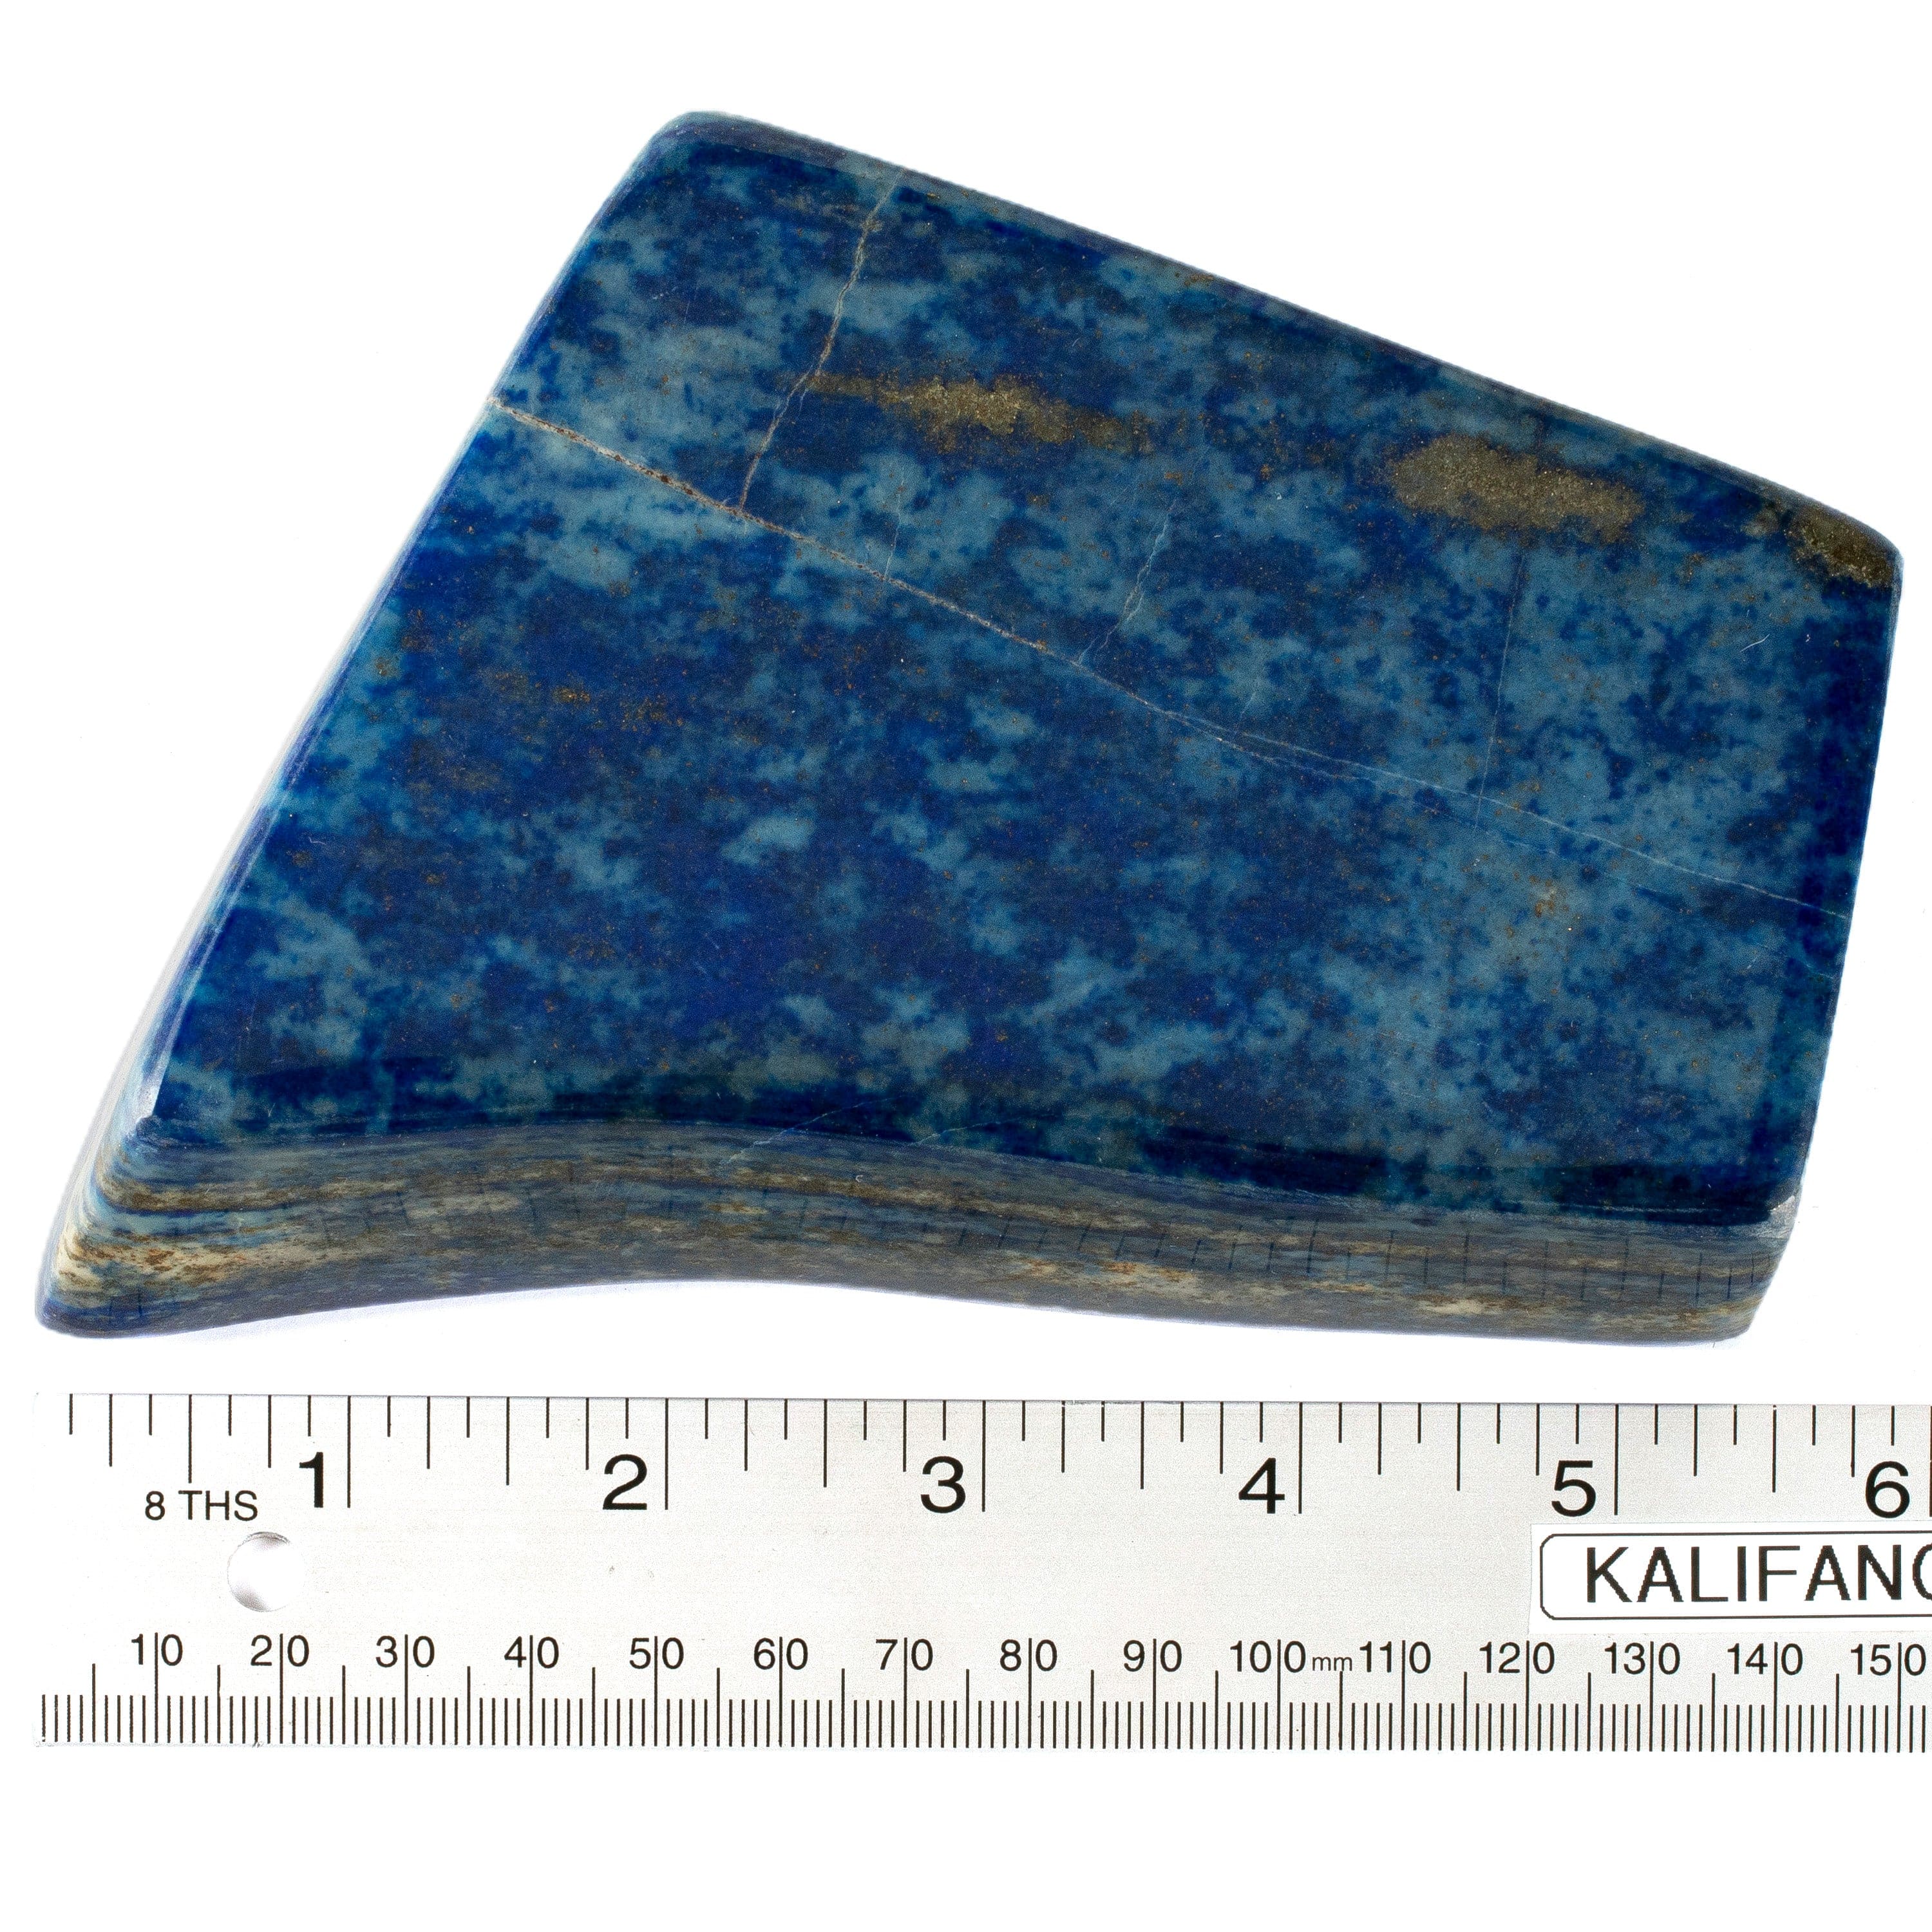 Kalifano Lapis Lapis Lazuli Freeform from Afghanistan - 5" / 919 grams LP950.003